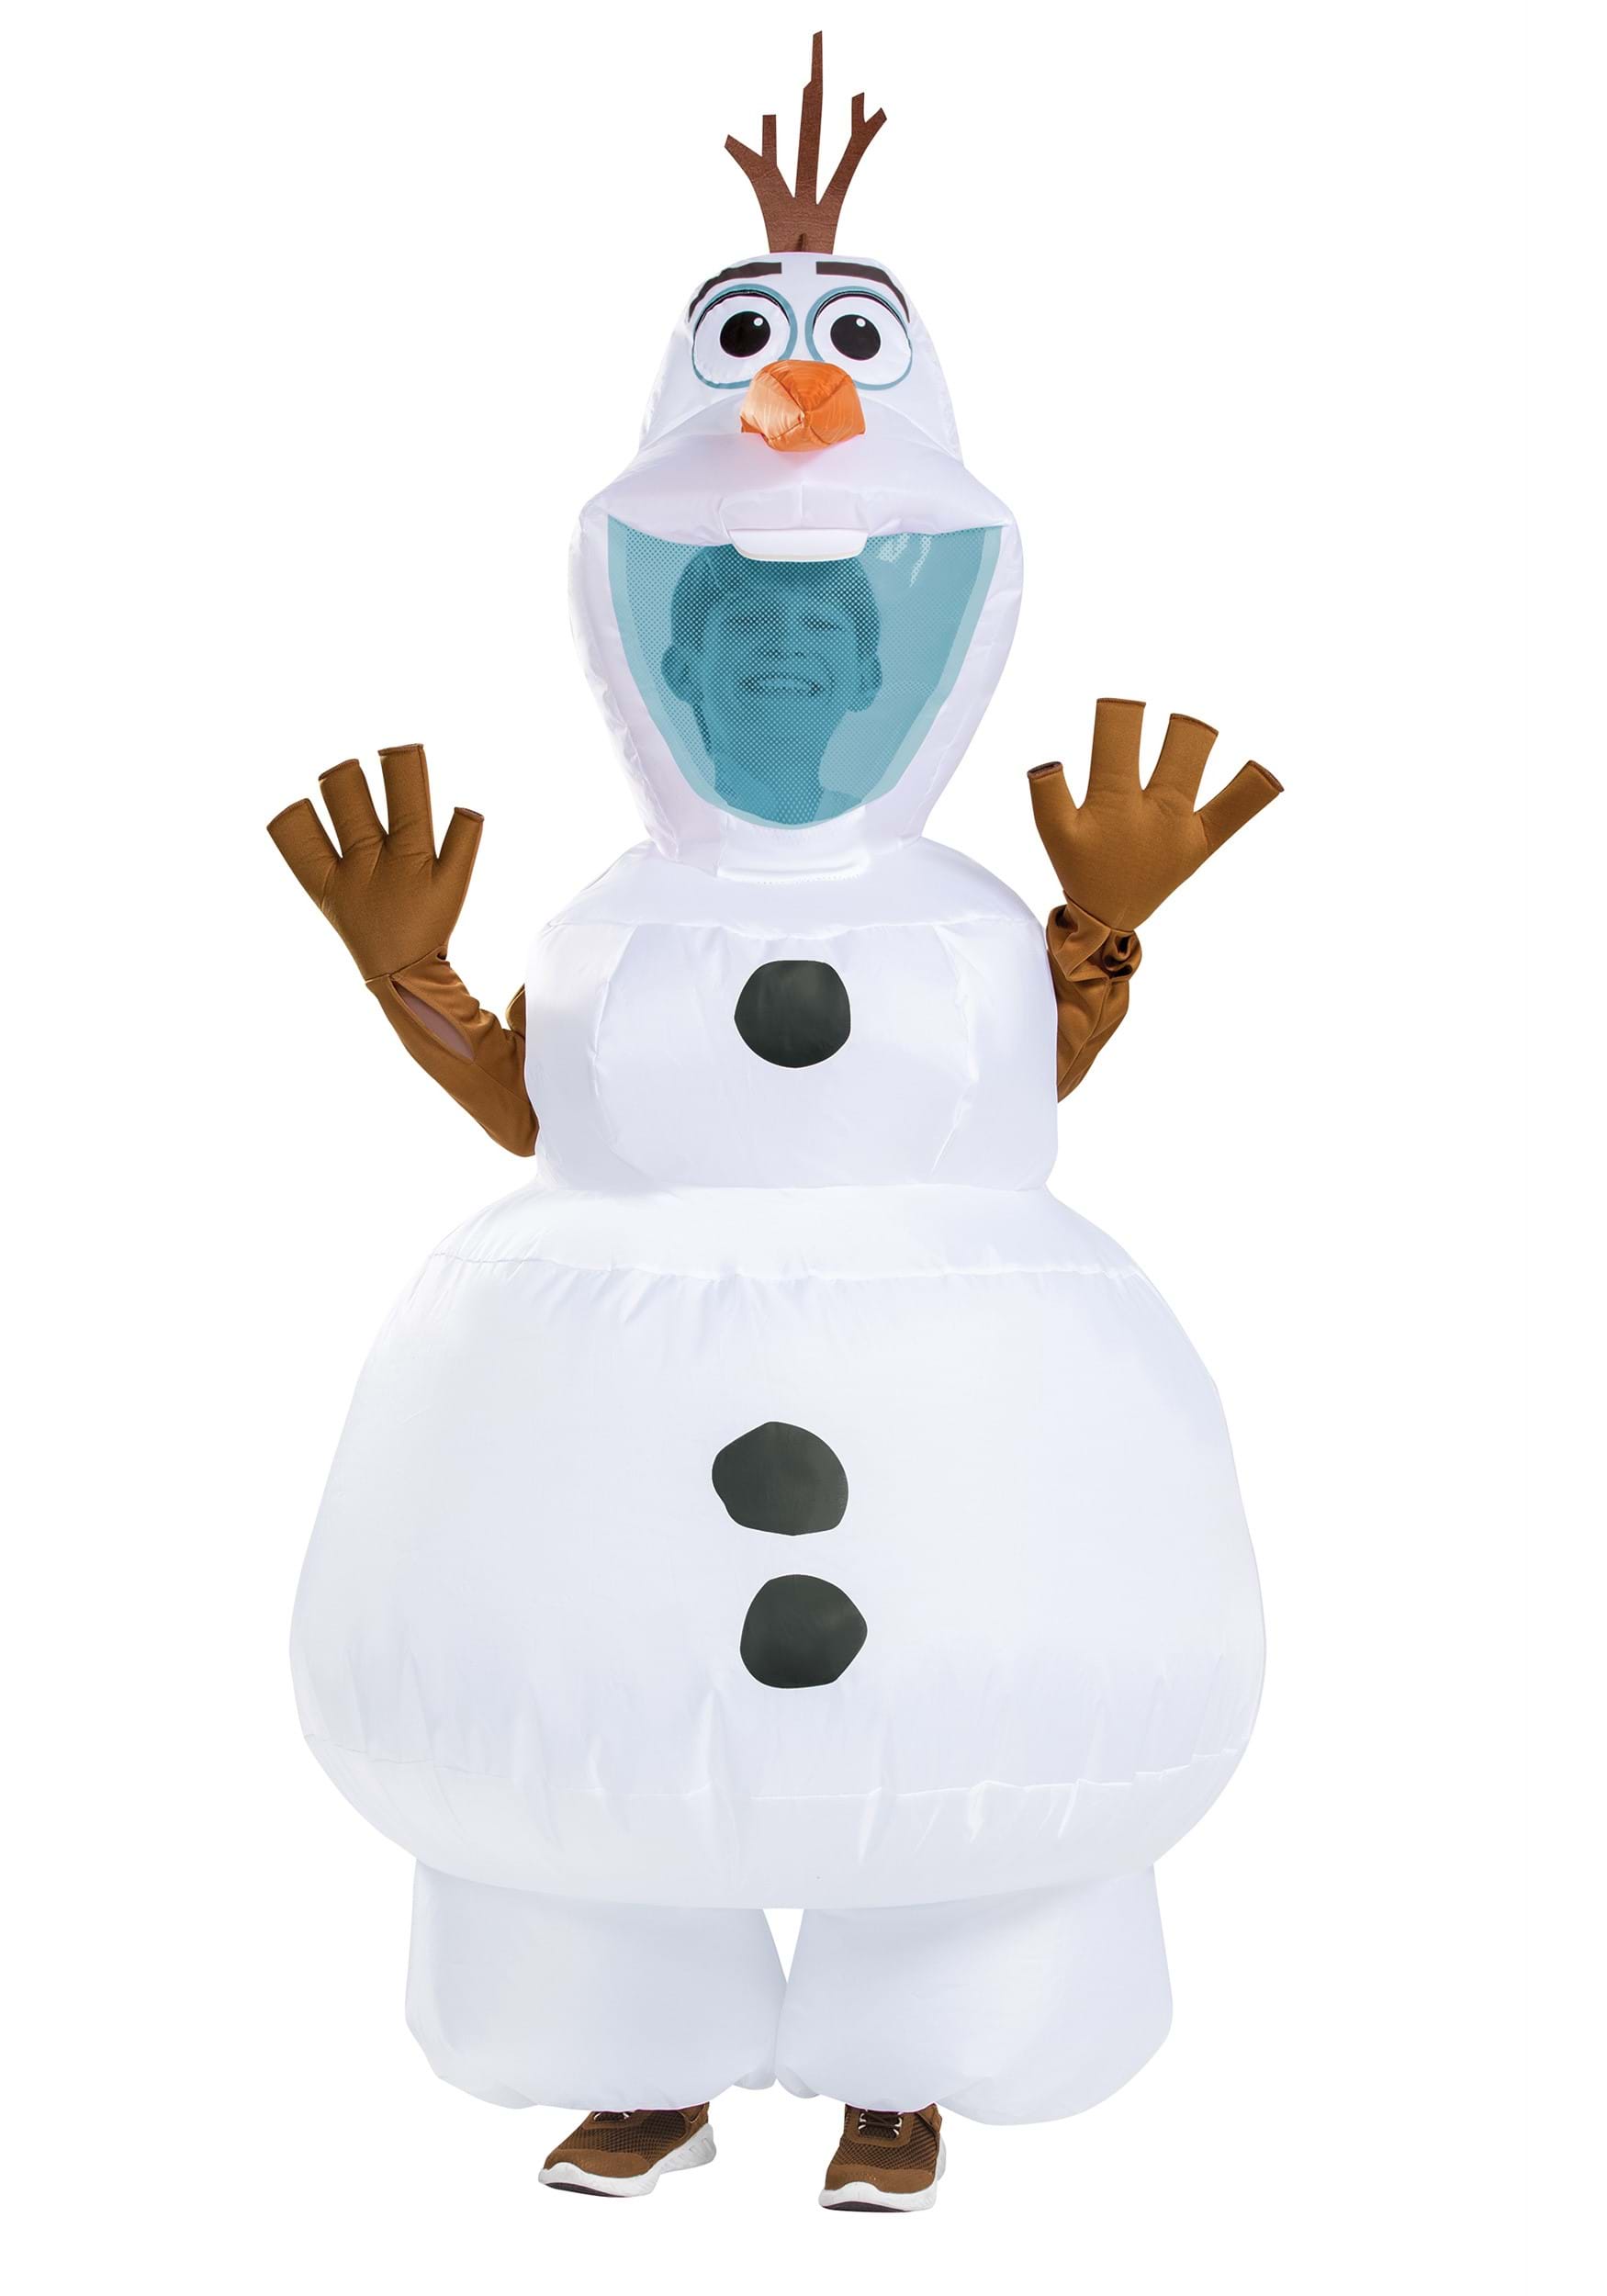 Kids Disneys Frozen Olaf Inflatable Costume